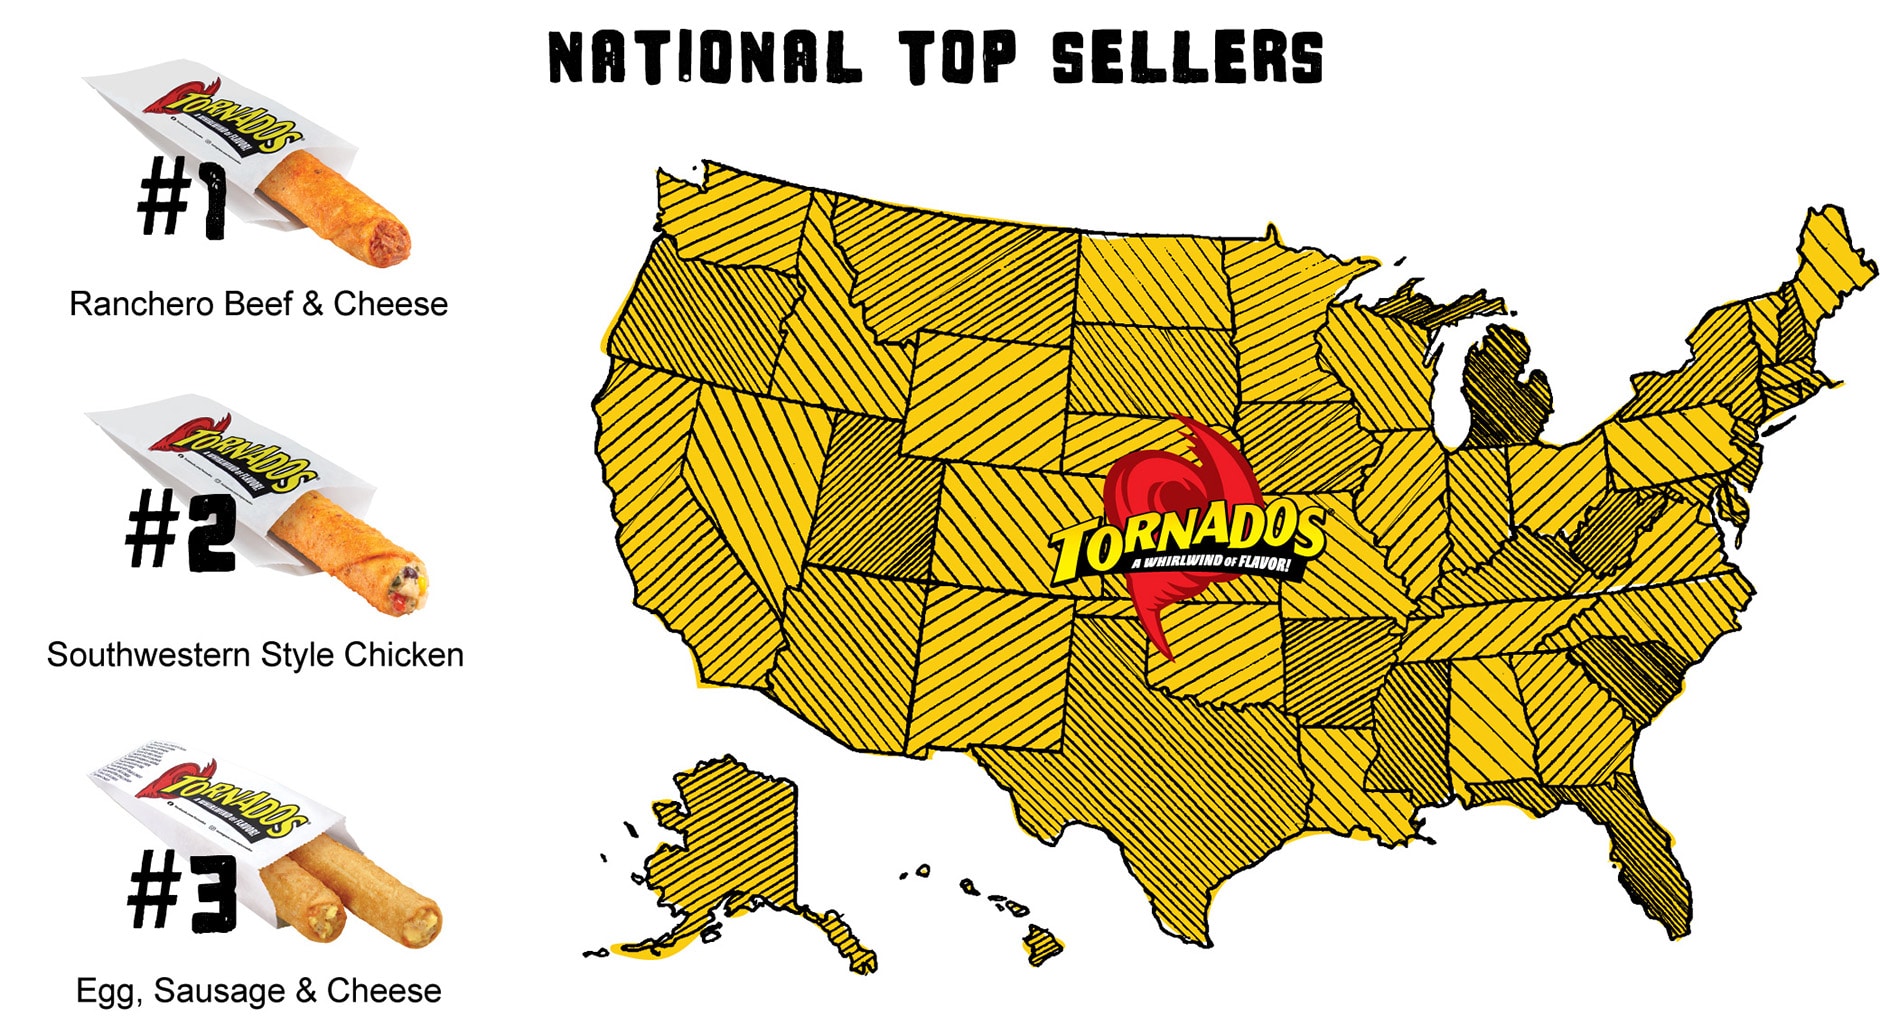 National Top Sellers